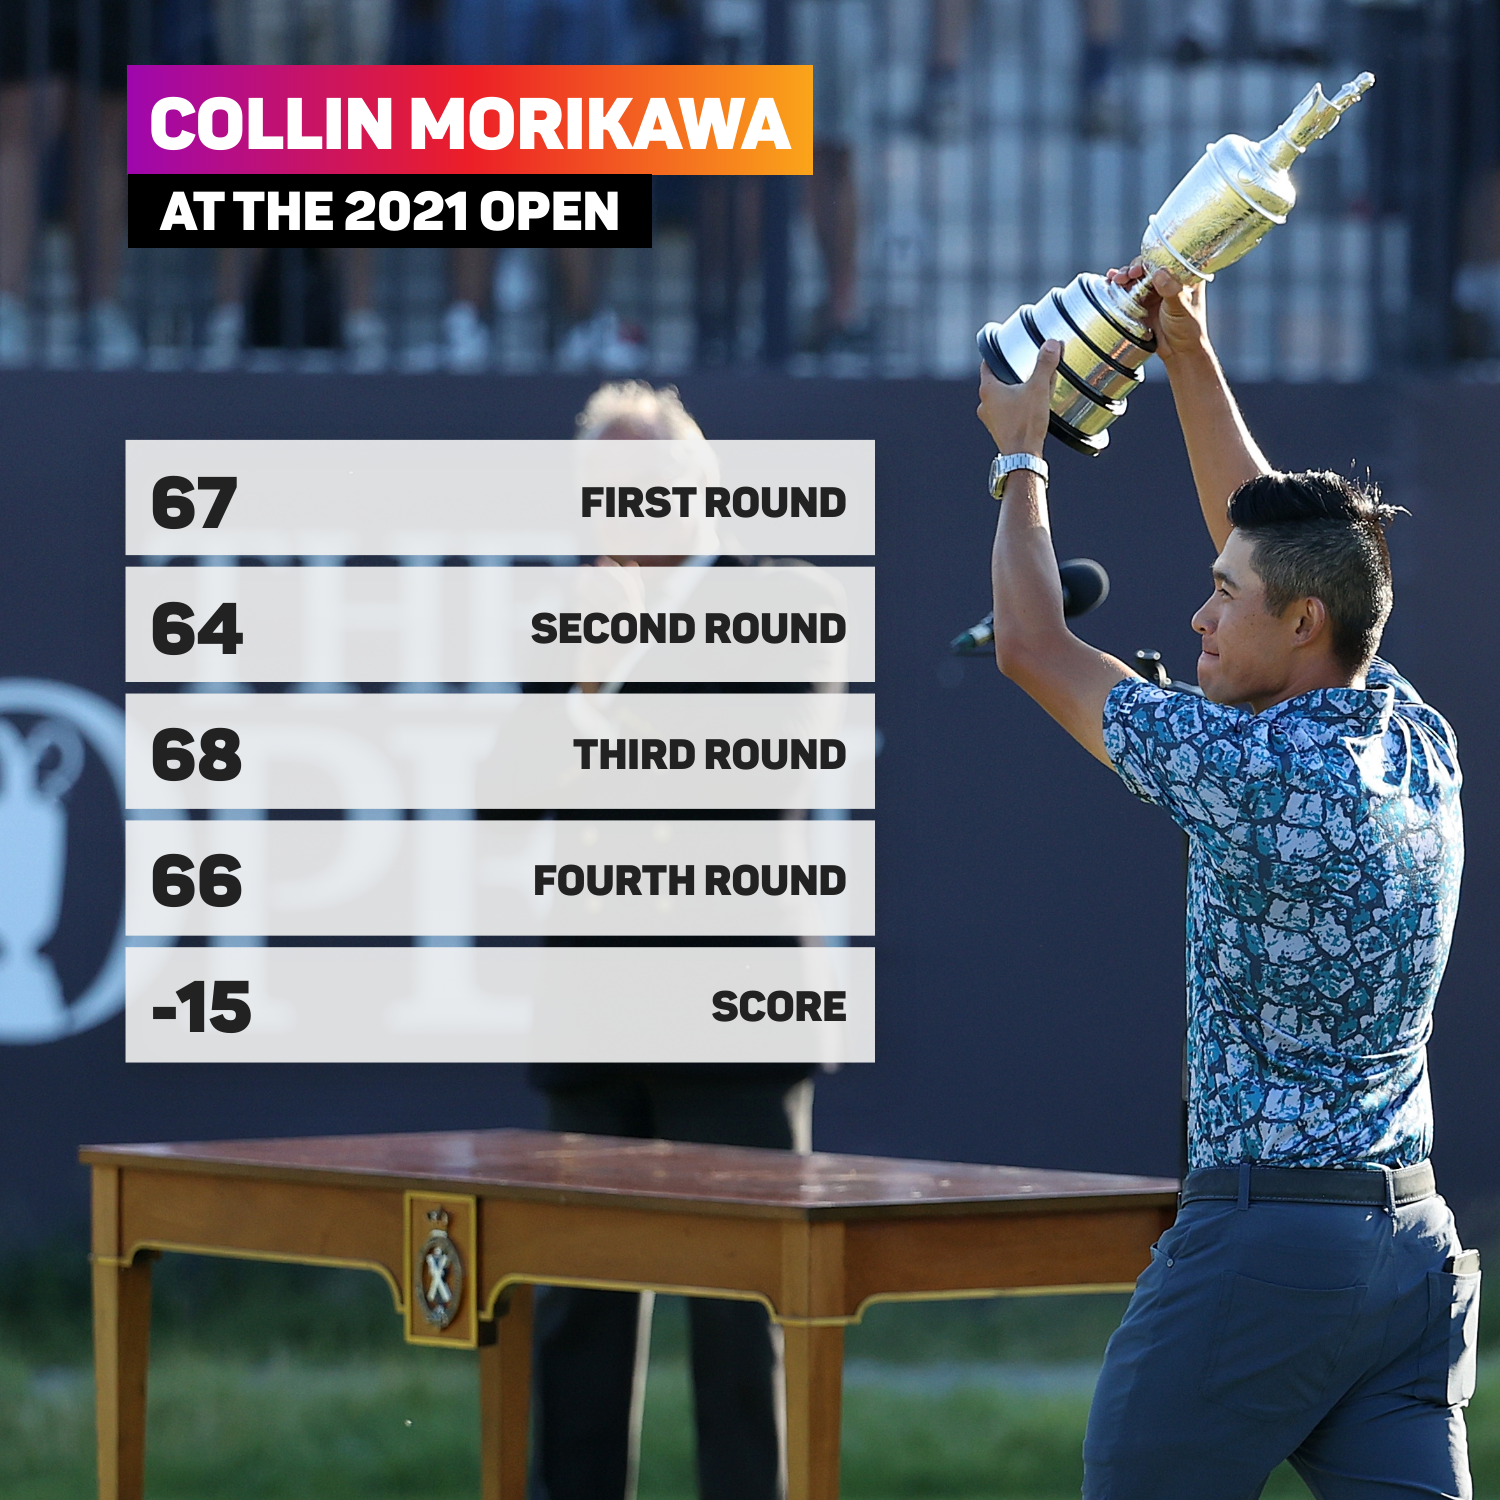 Collin Morikawa at the 2021 Open